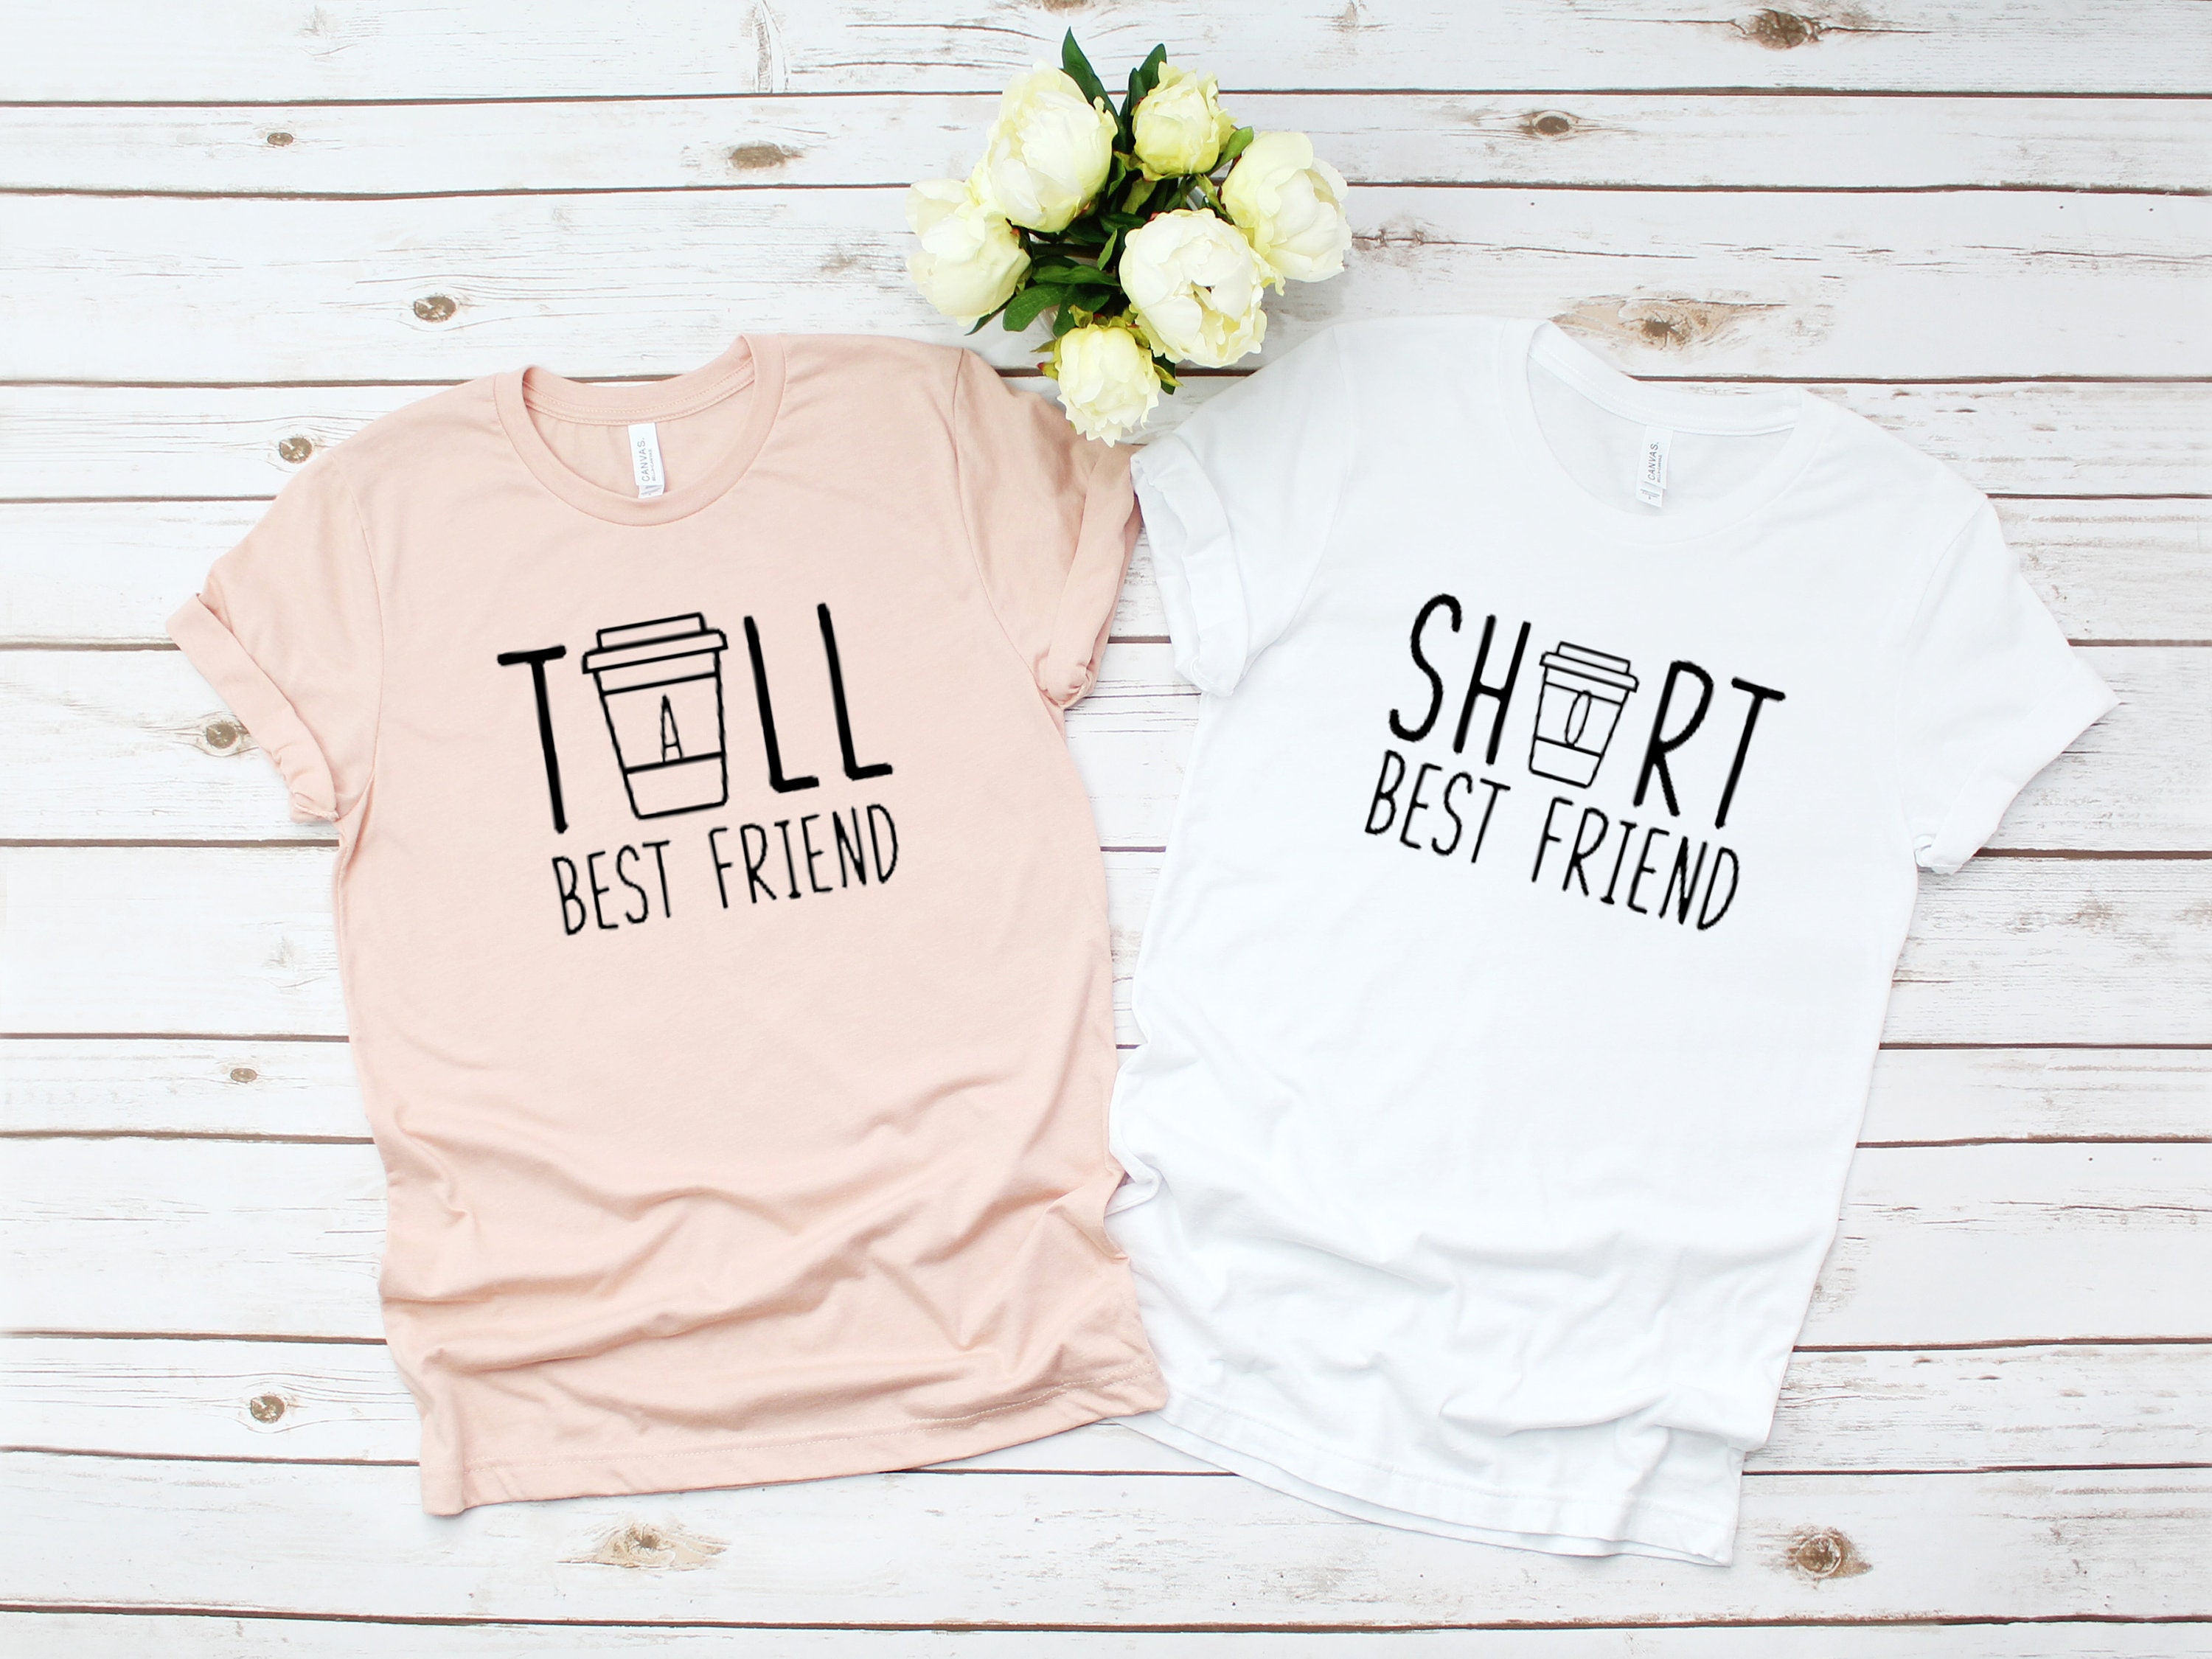 Best Shirts Tall Best Friend Short Best Friend - Etsy